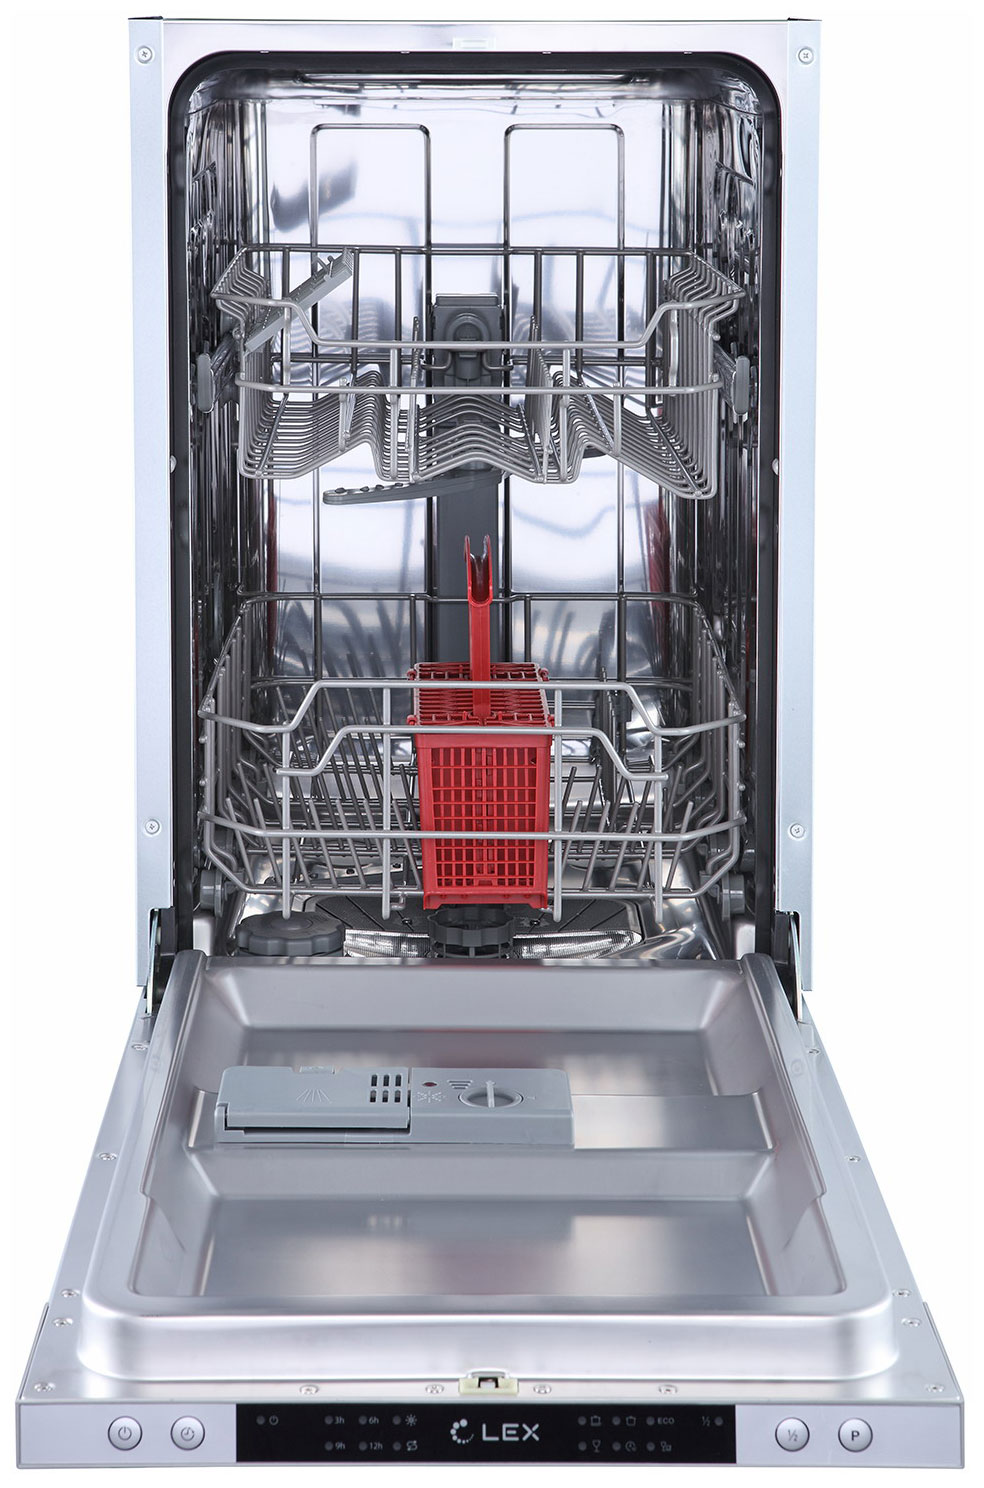 Встраиваемая посудомоечная машина LEX PM 4562 B посудомоечная машина встраиваемая lex pm 4562 b 45 см chmi000300